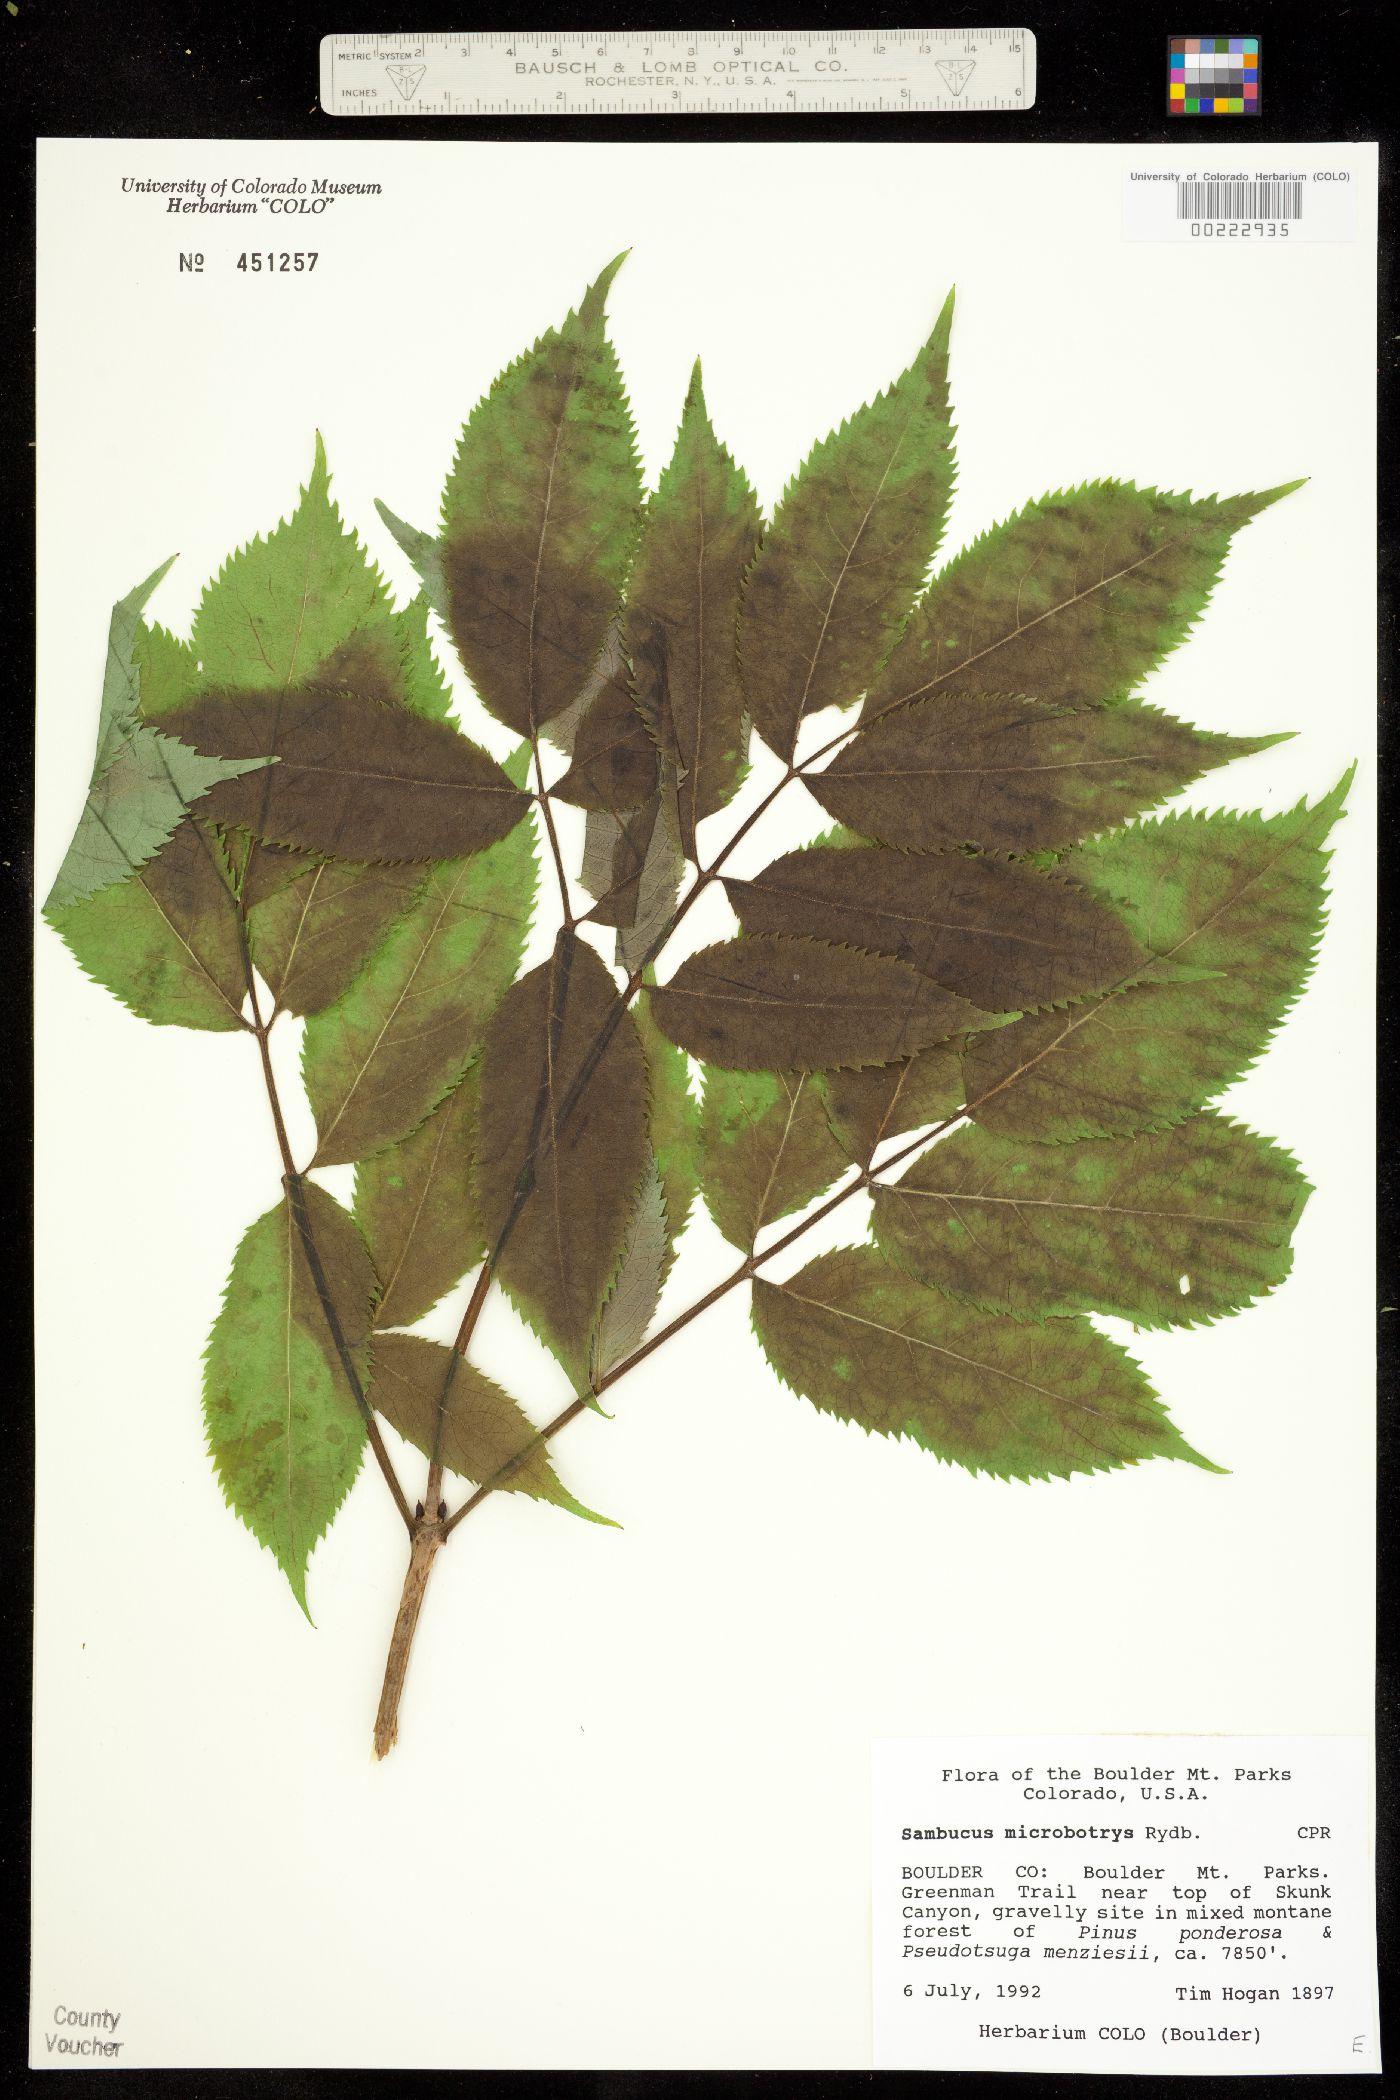 Sambucus racemosa ssp. pubens image